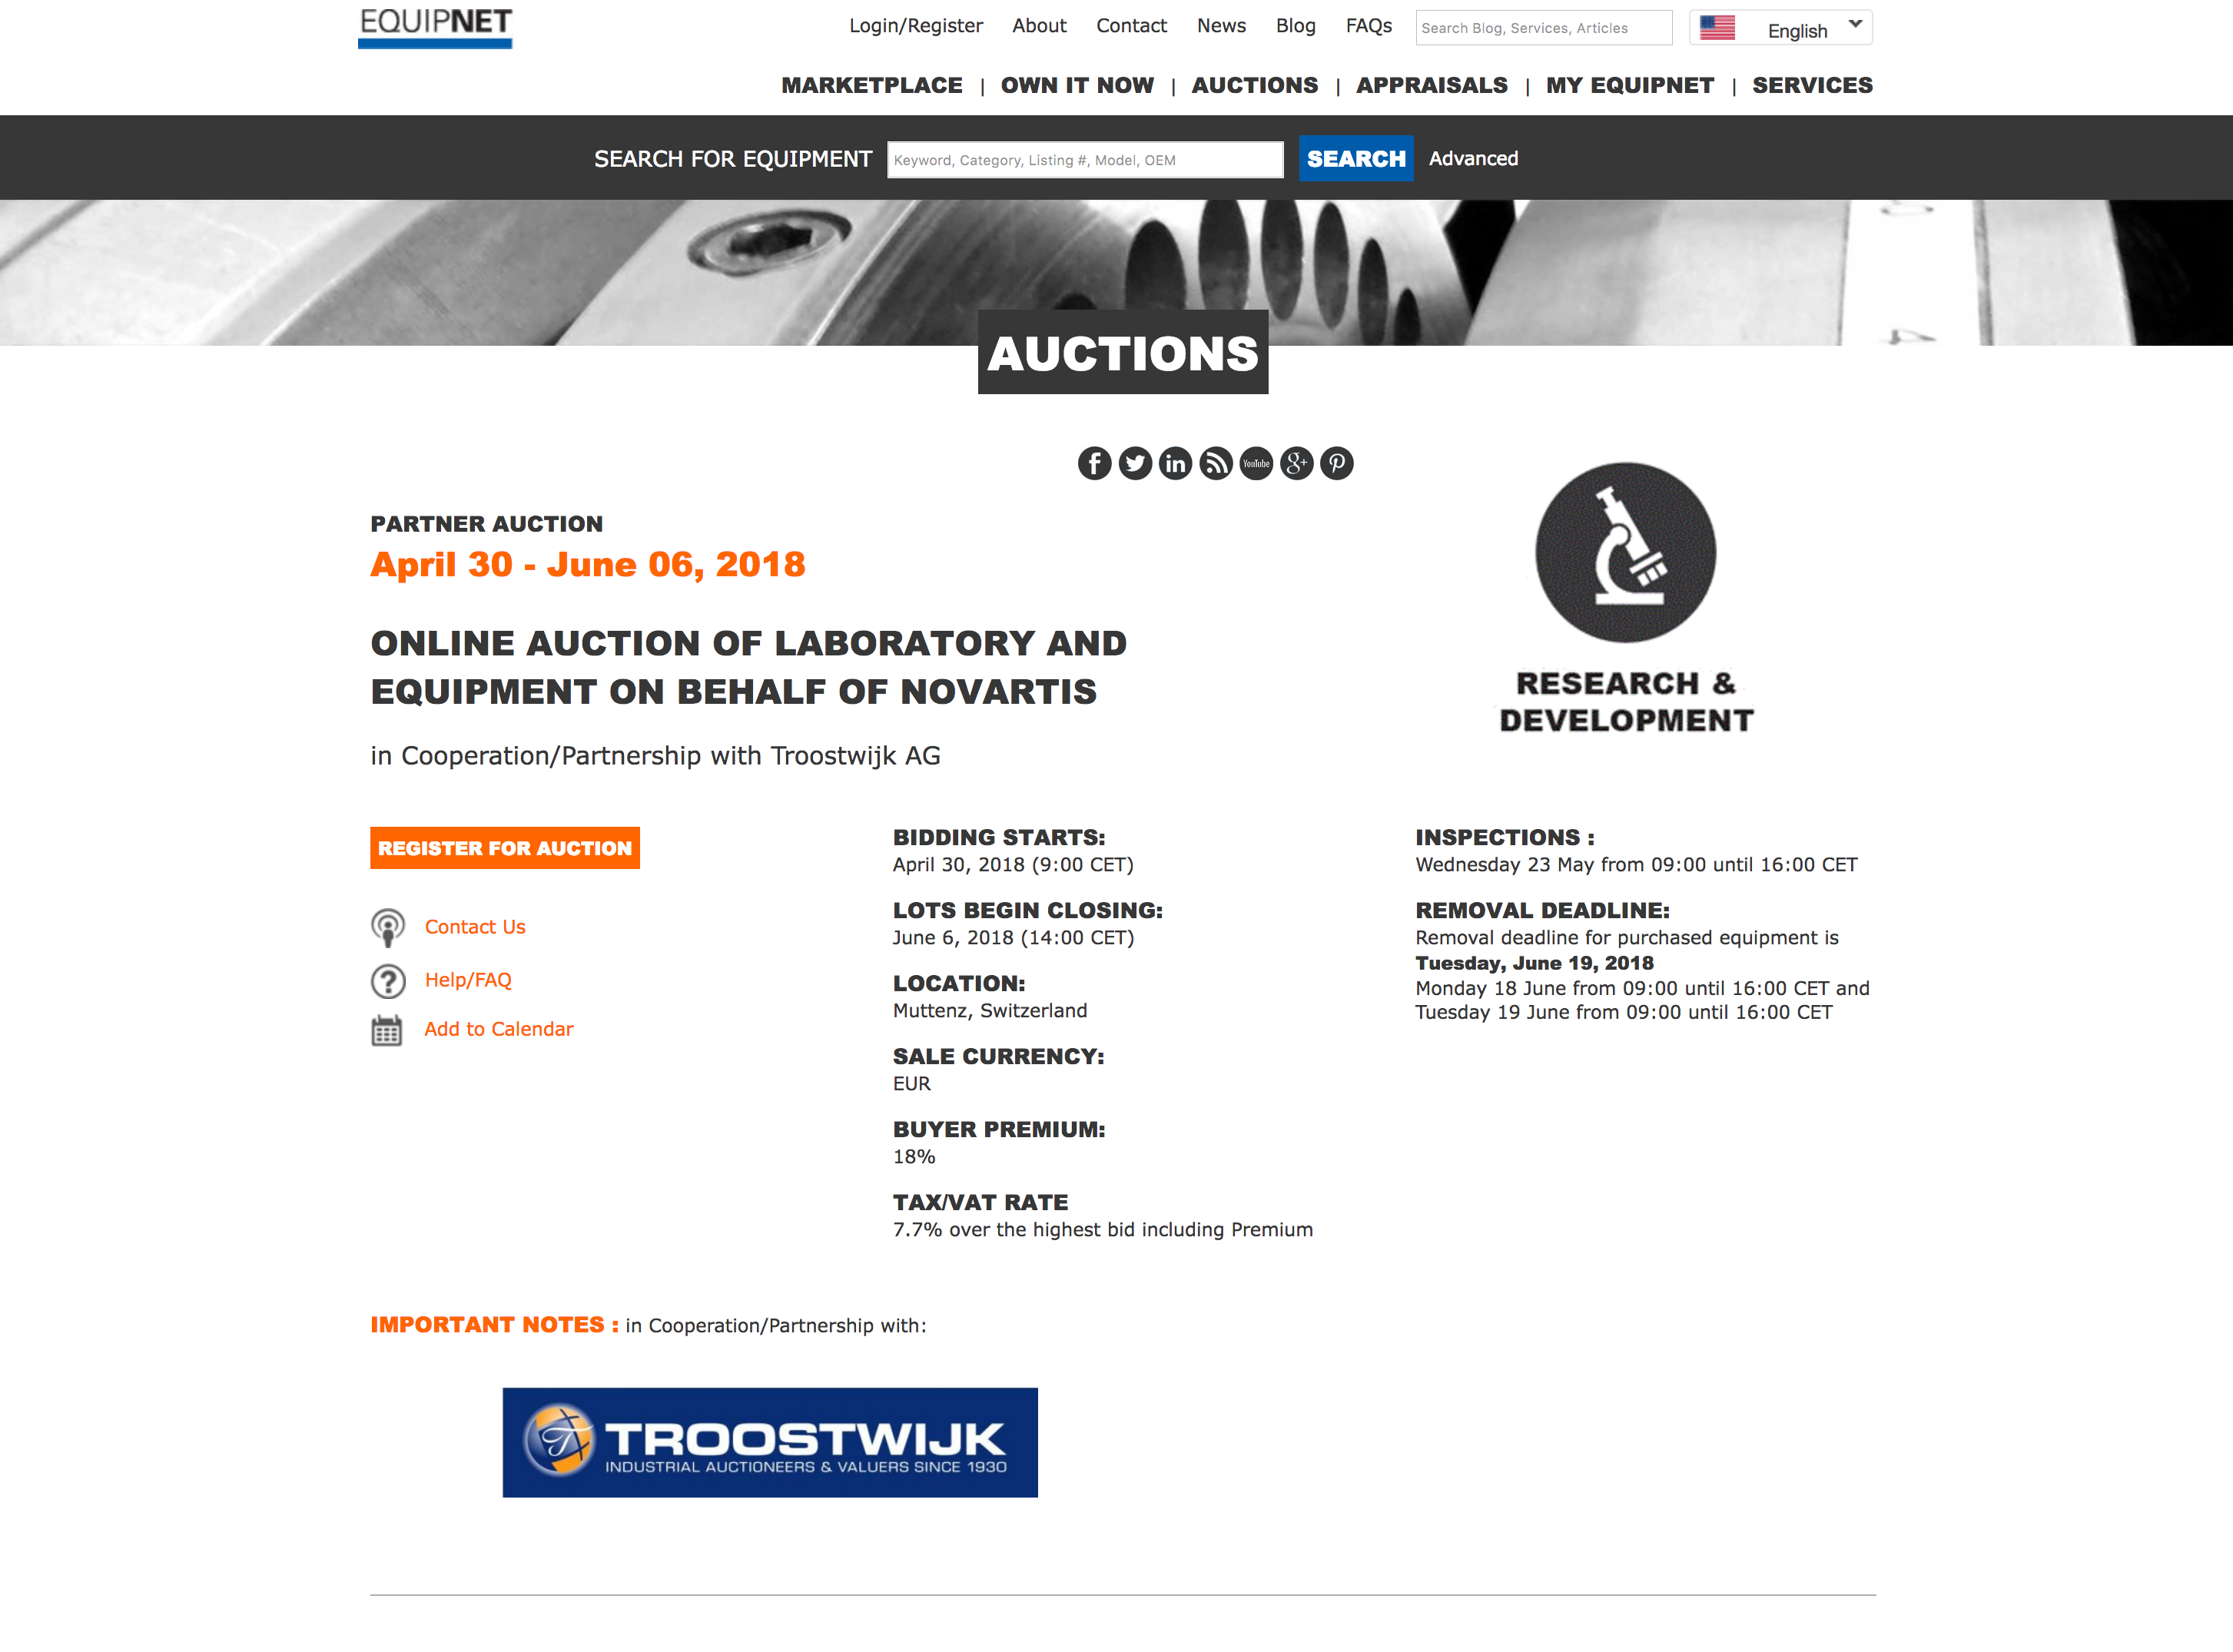 Online auction on behalf of Novartis